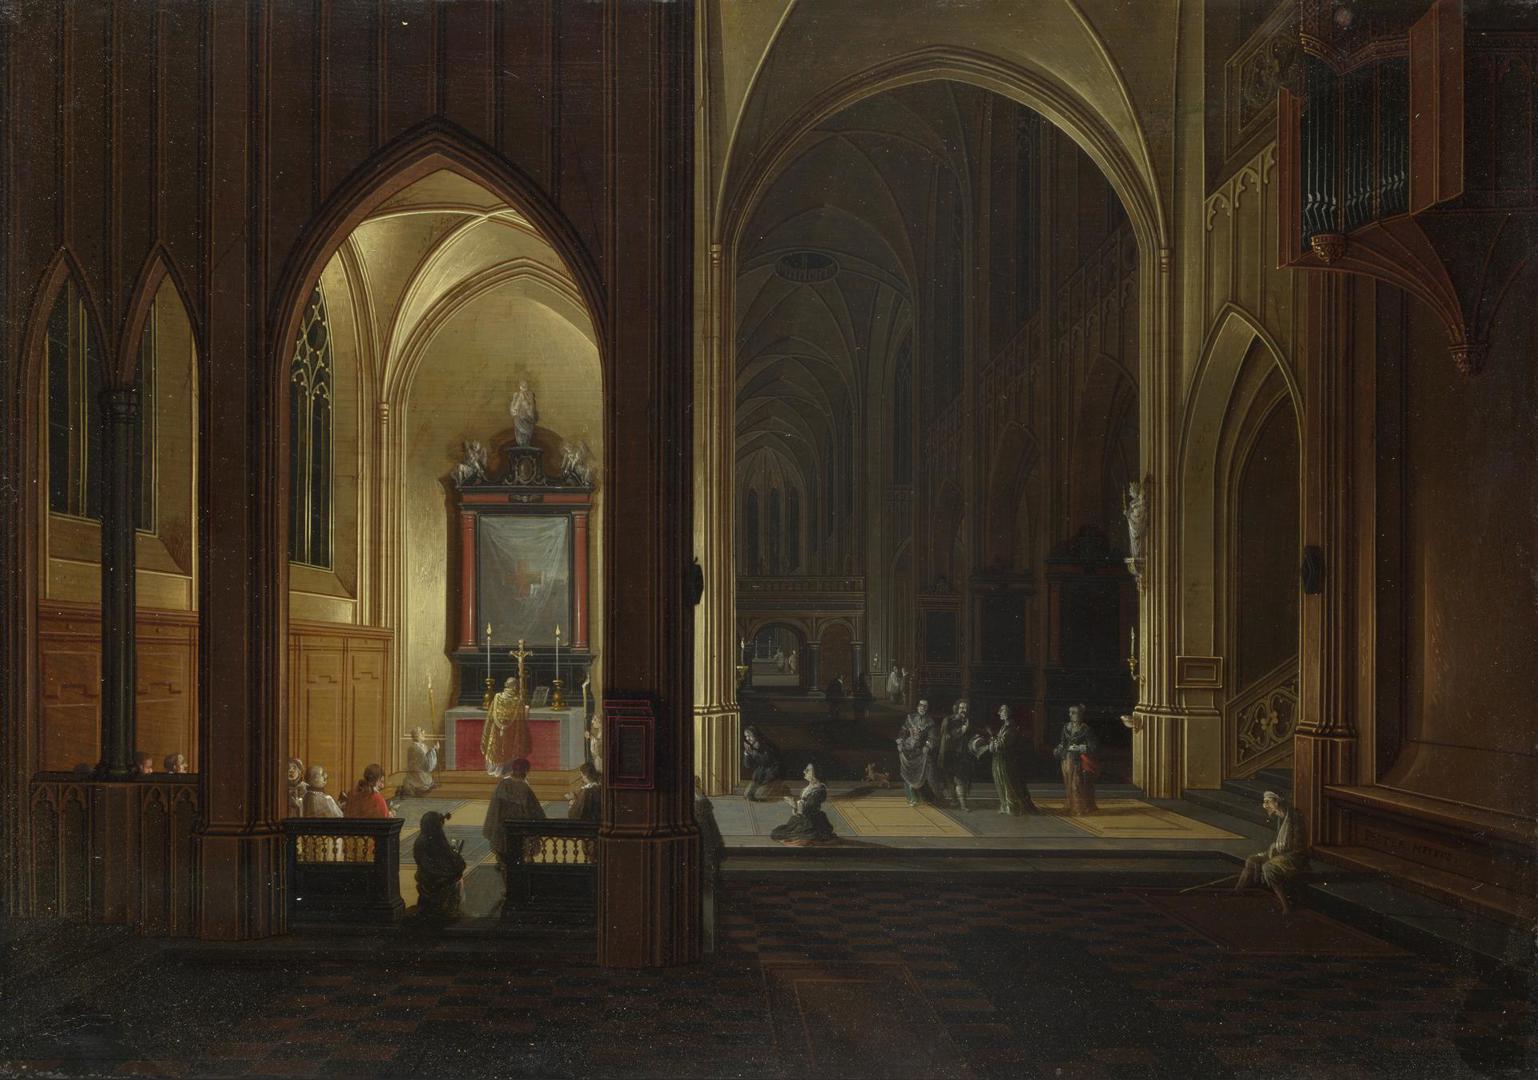 An Evening Service in a Church by Pieter Neeffs the Elder and Bonaventura Peeters the Elder